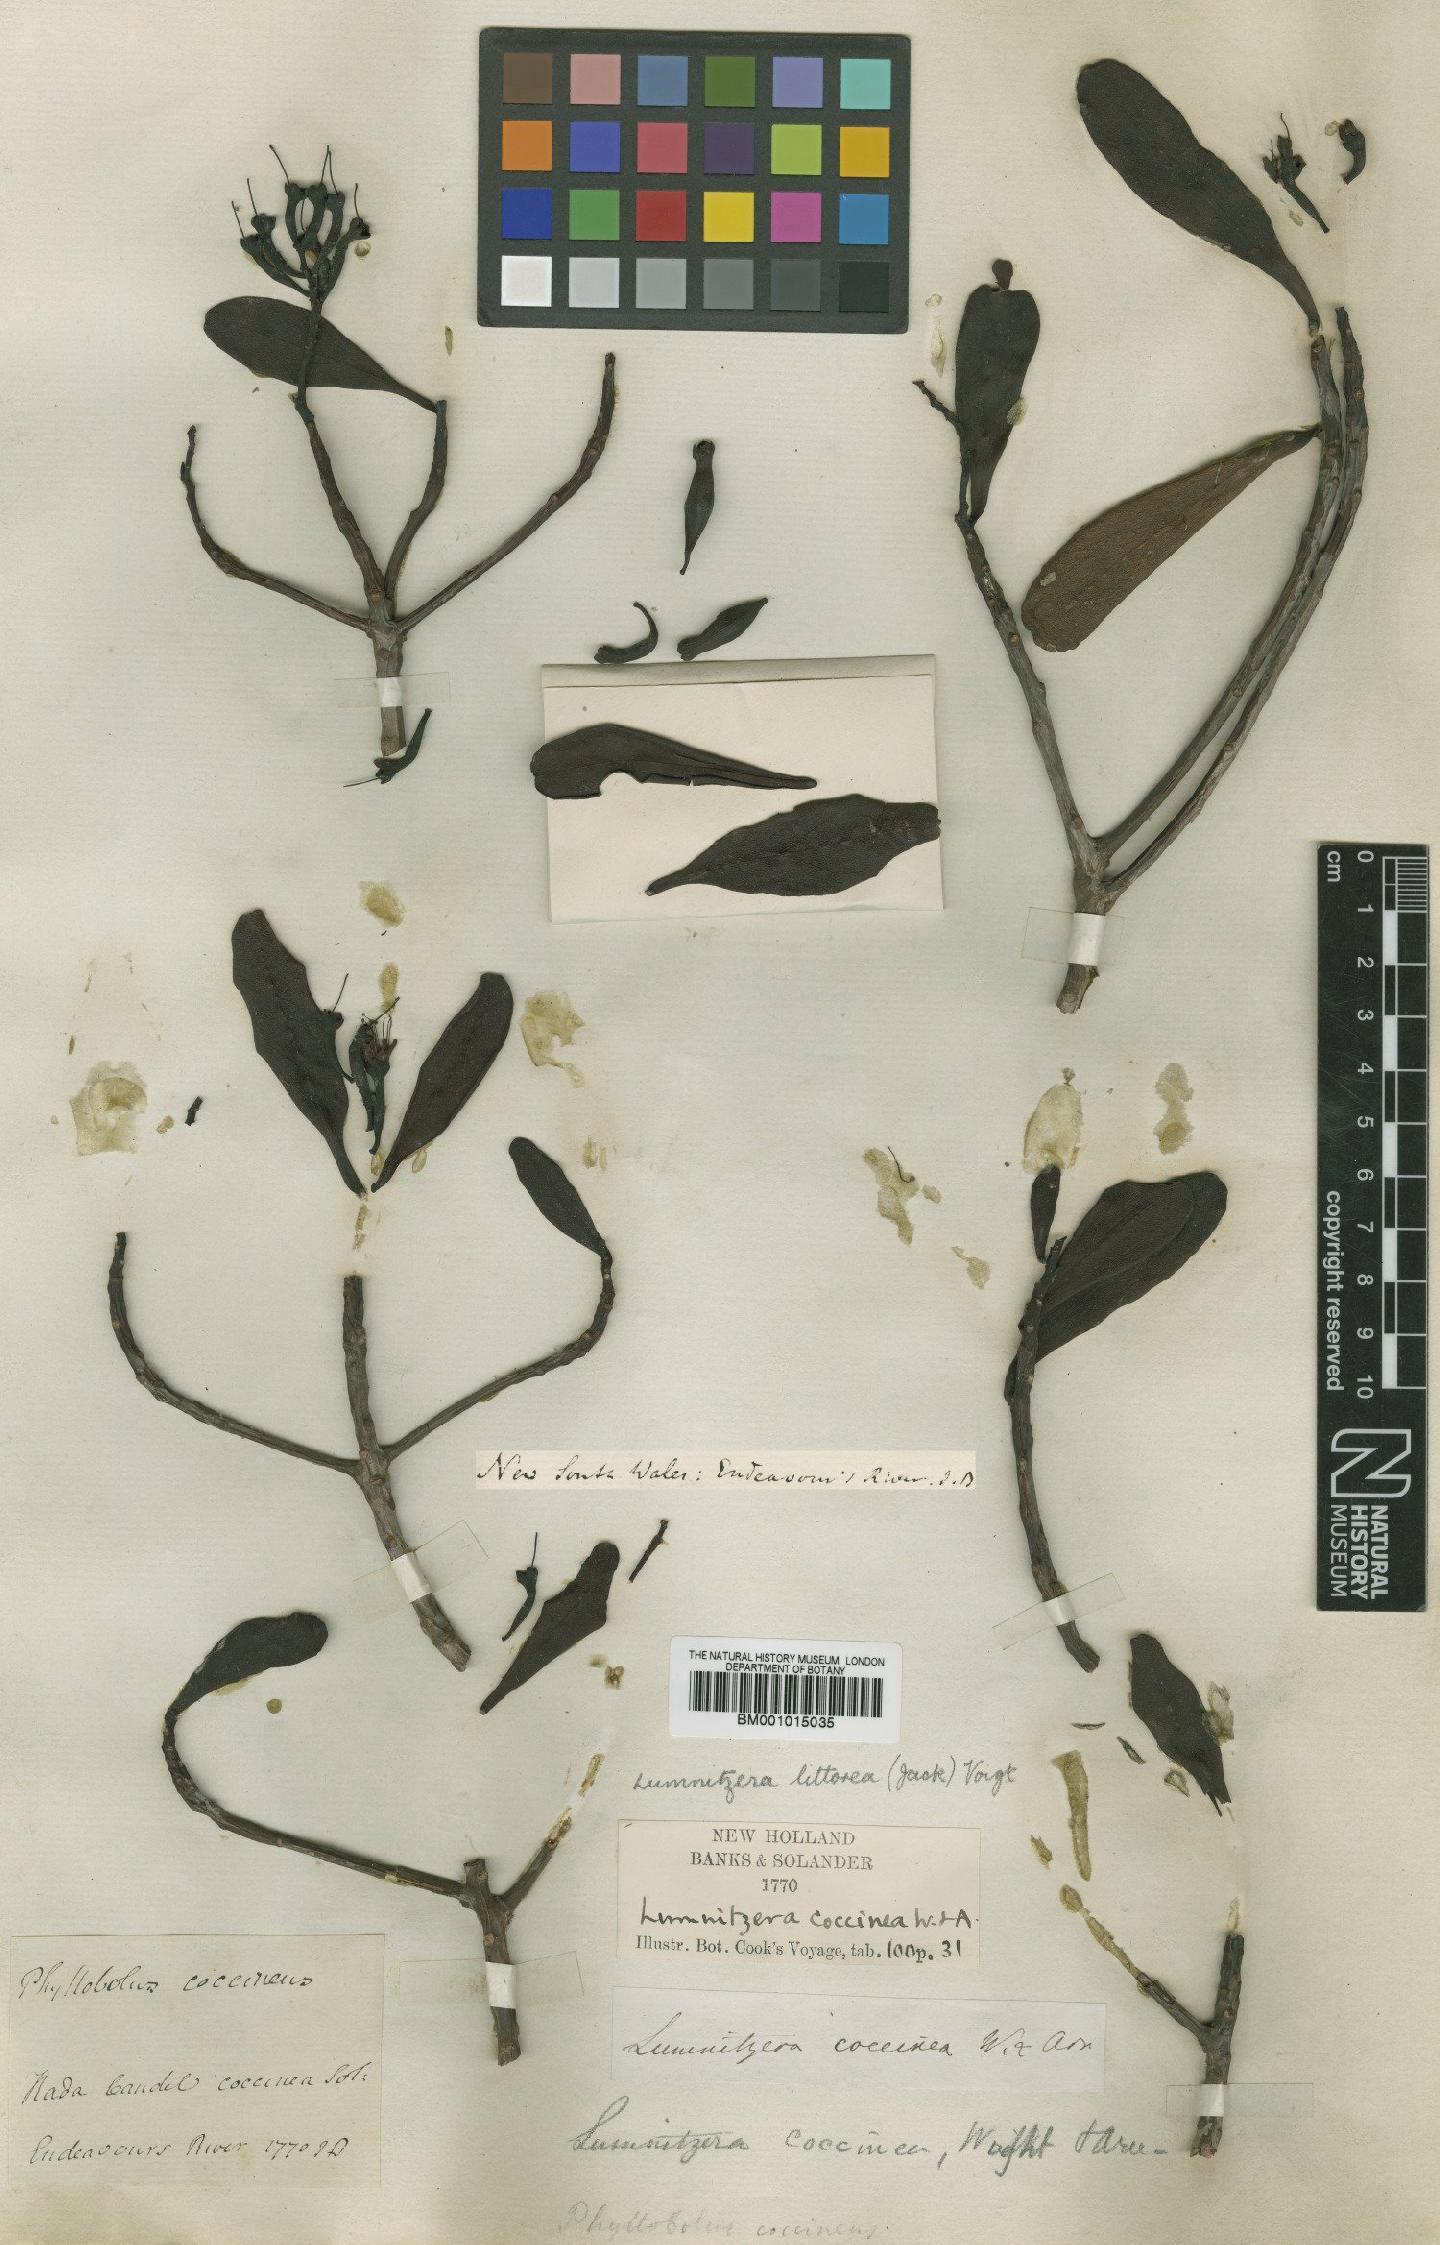 To NHMUK collection (Lumnitzera littorea (Jack) Voigt; Type; NHMUK:ecatalogue:601000)